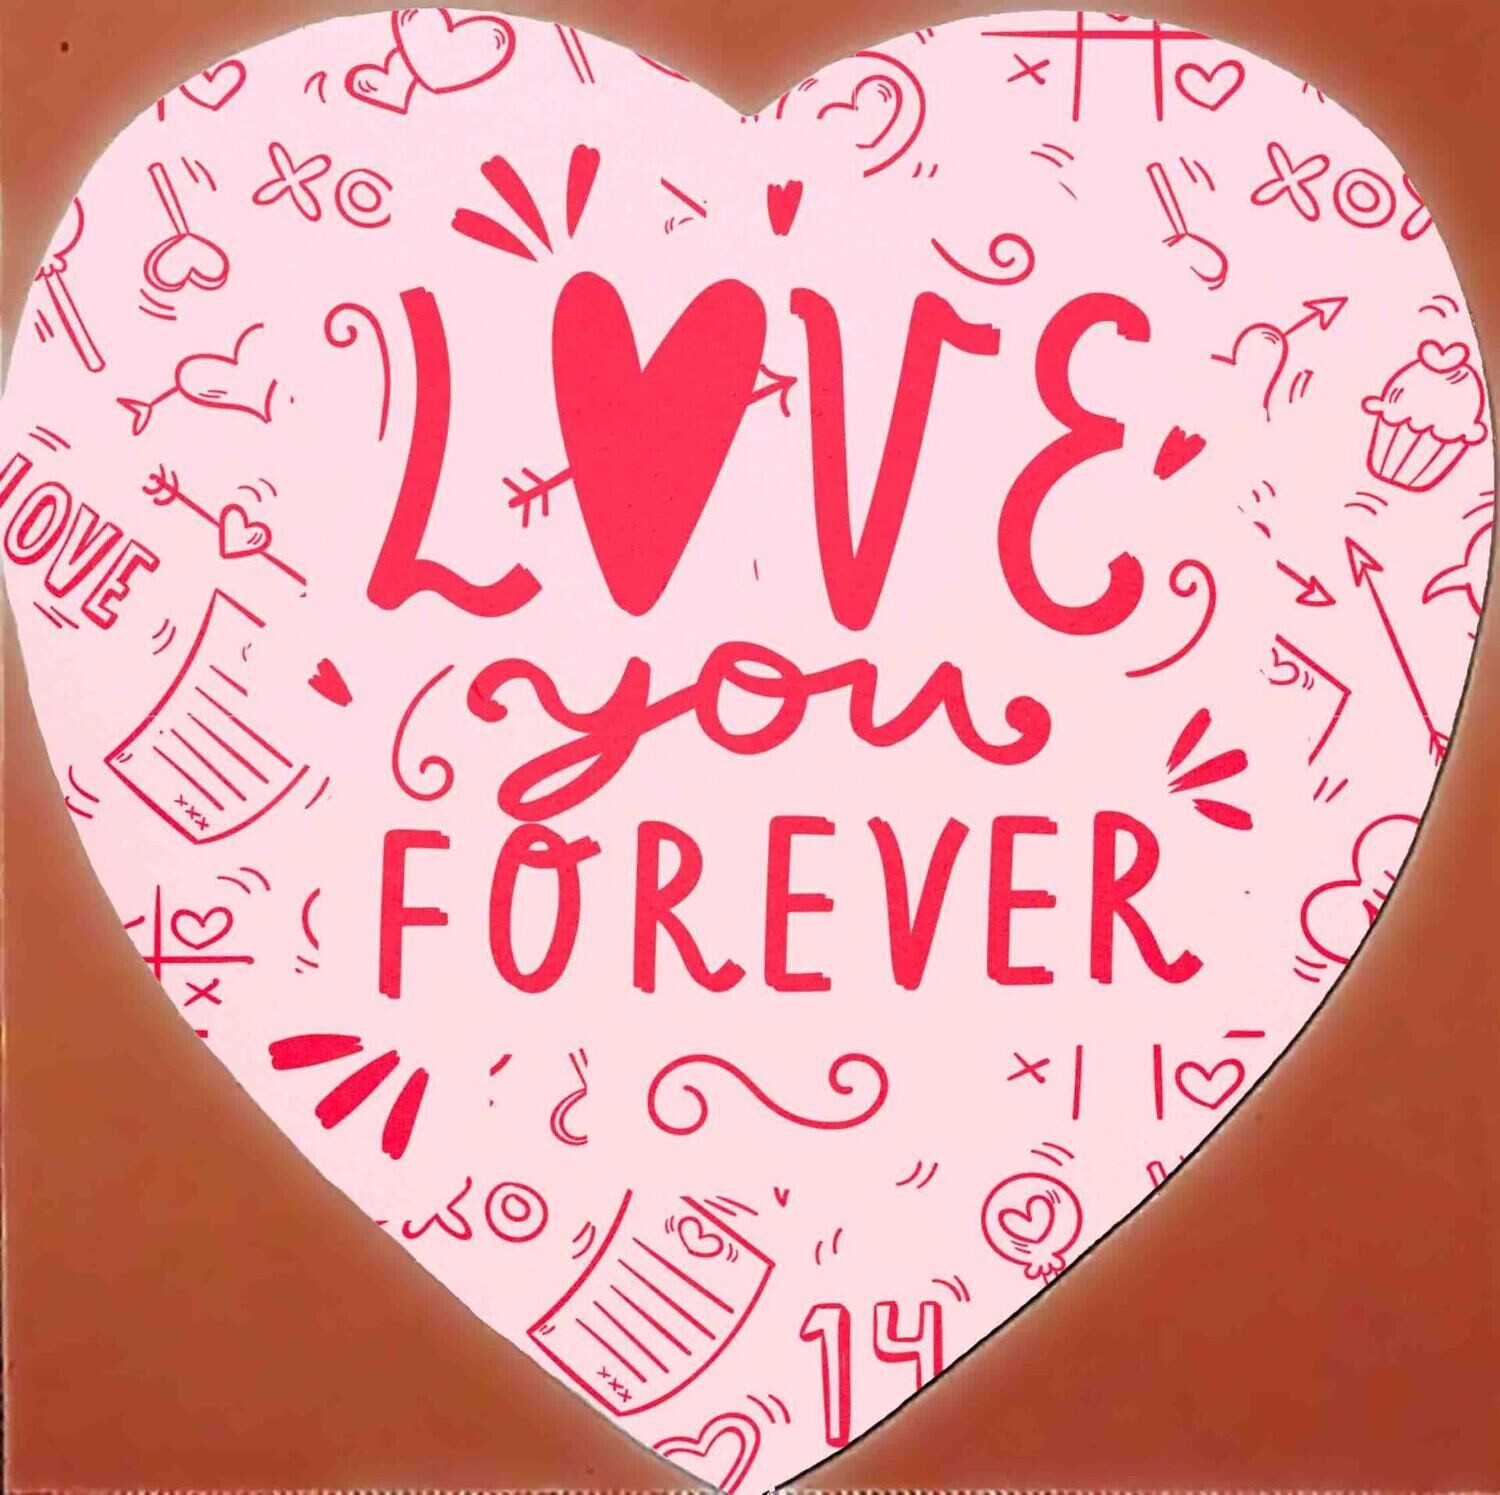 Puzle forma de corazón "Love you Forever"